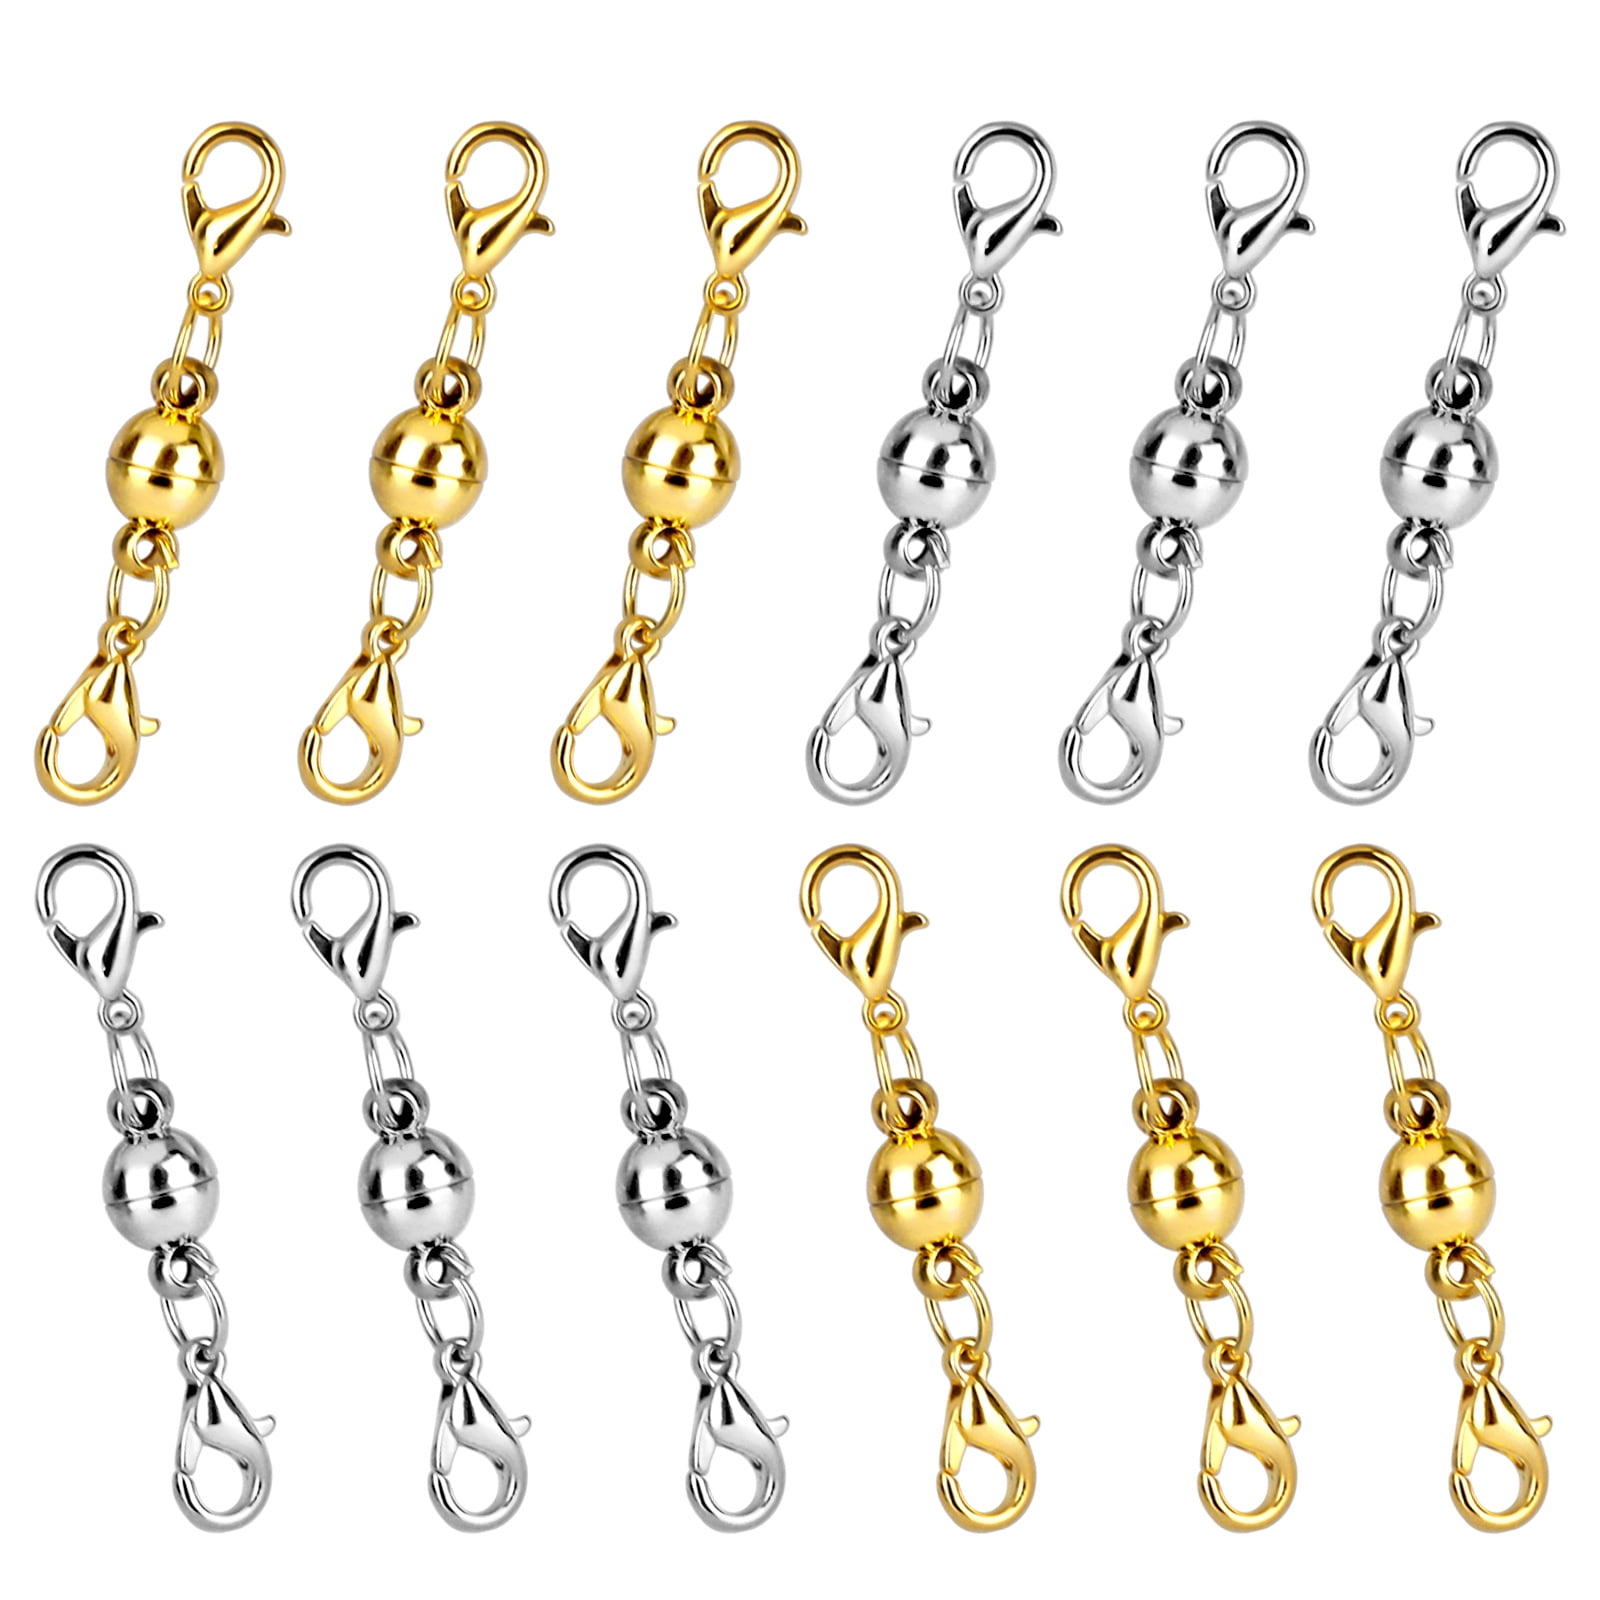 10pcs Magnetic Clasps Hooks Bracelet Necklace Connectors For DIY Jewelry Making